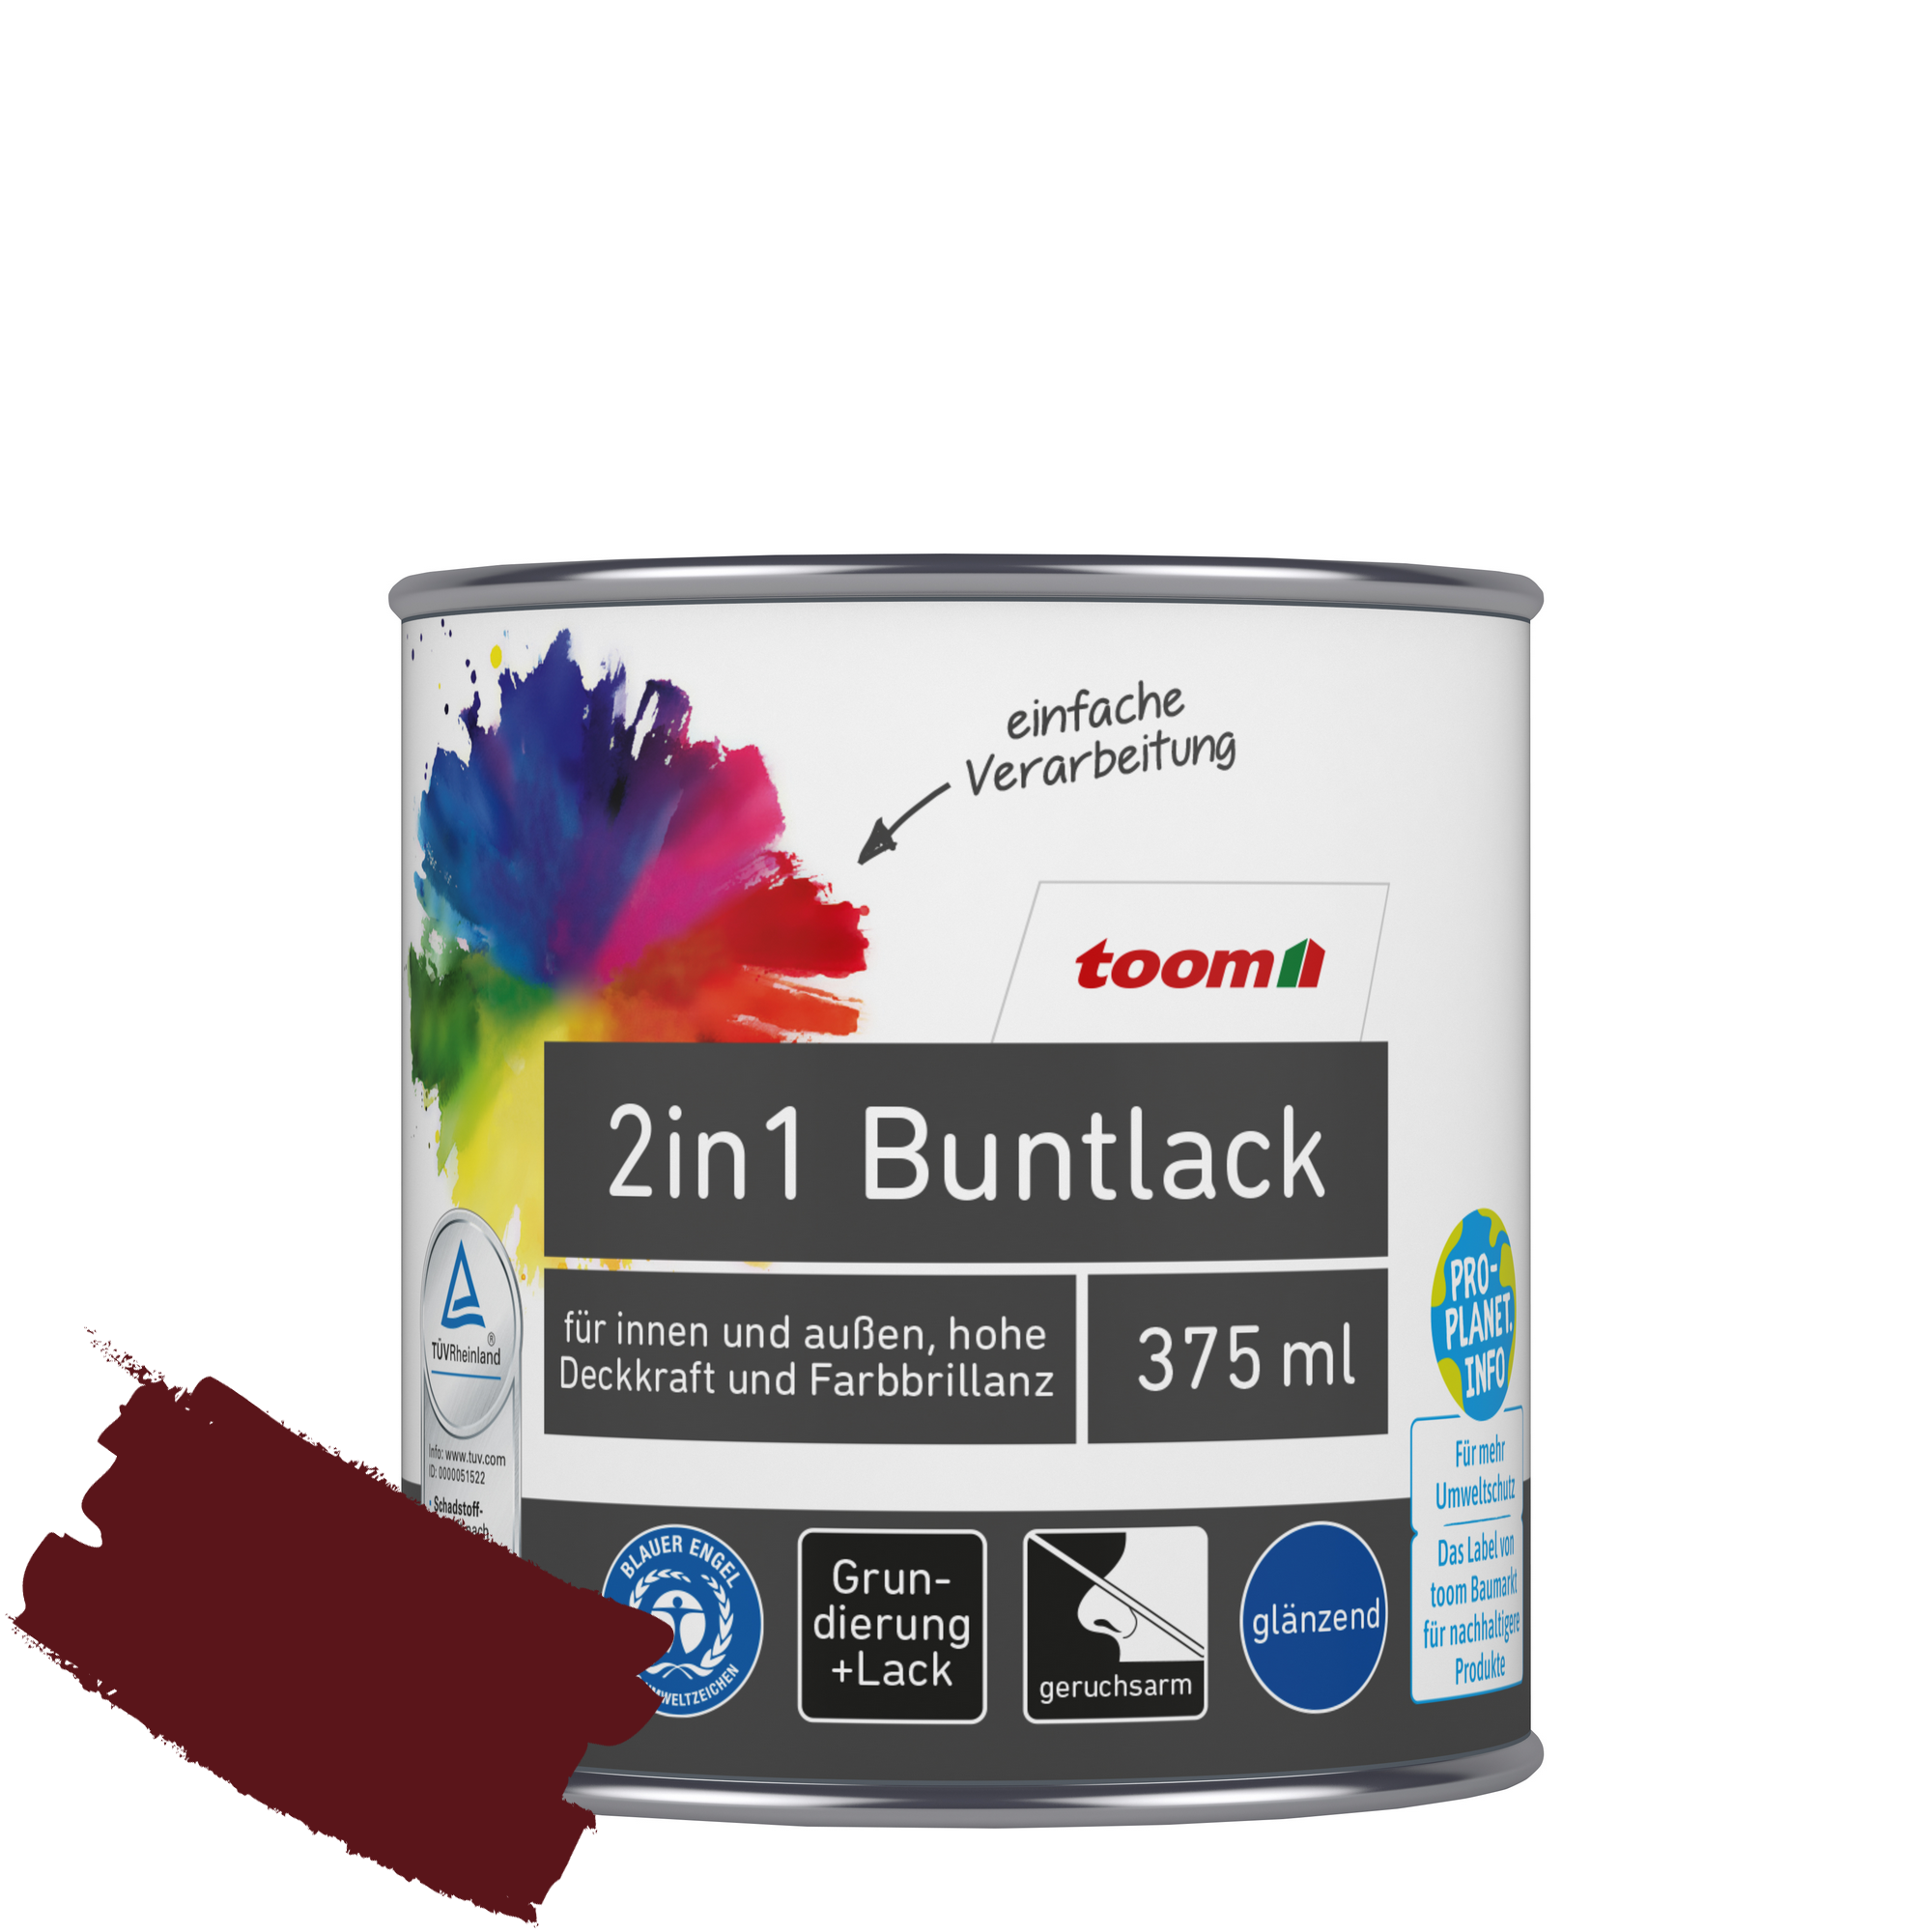 2in1 Buntlack 'Abendrot' purpurrot glänzend 375 ml + product picture